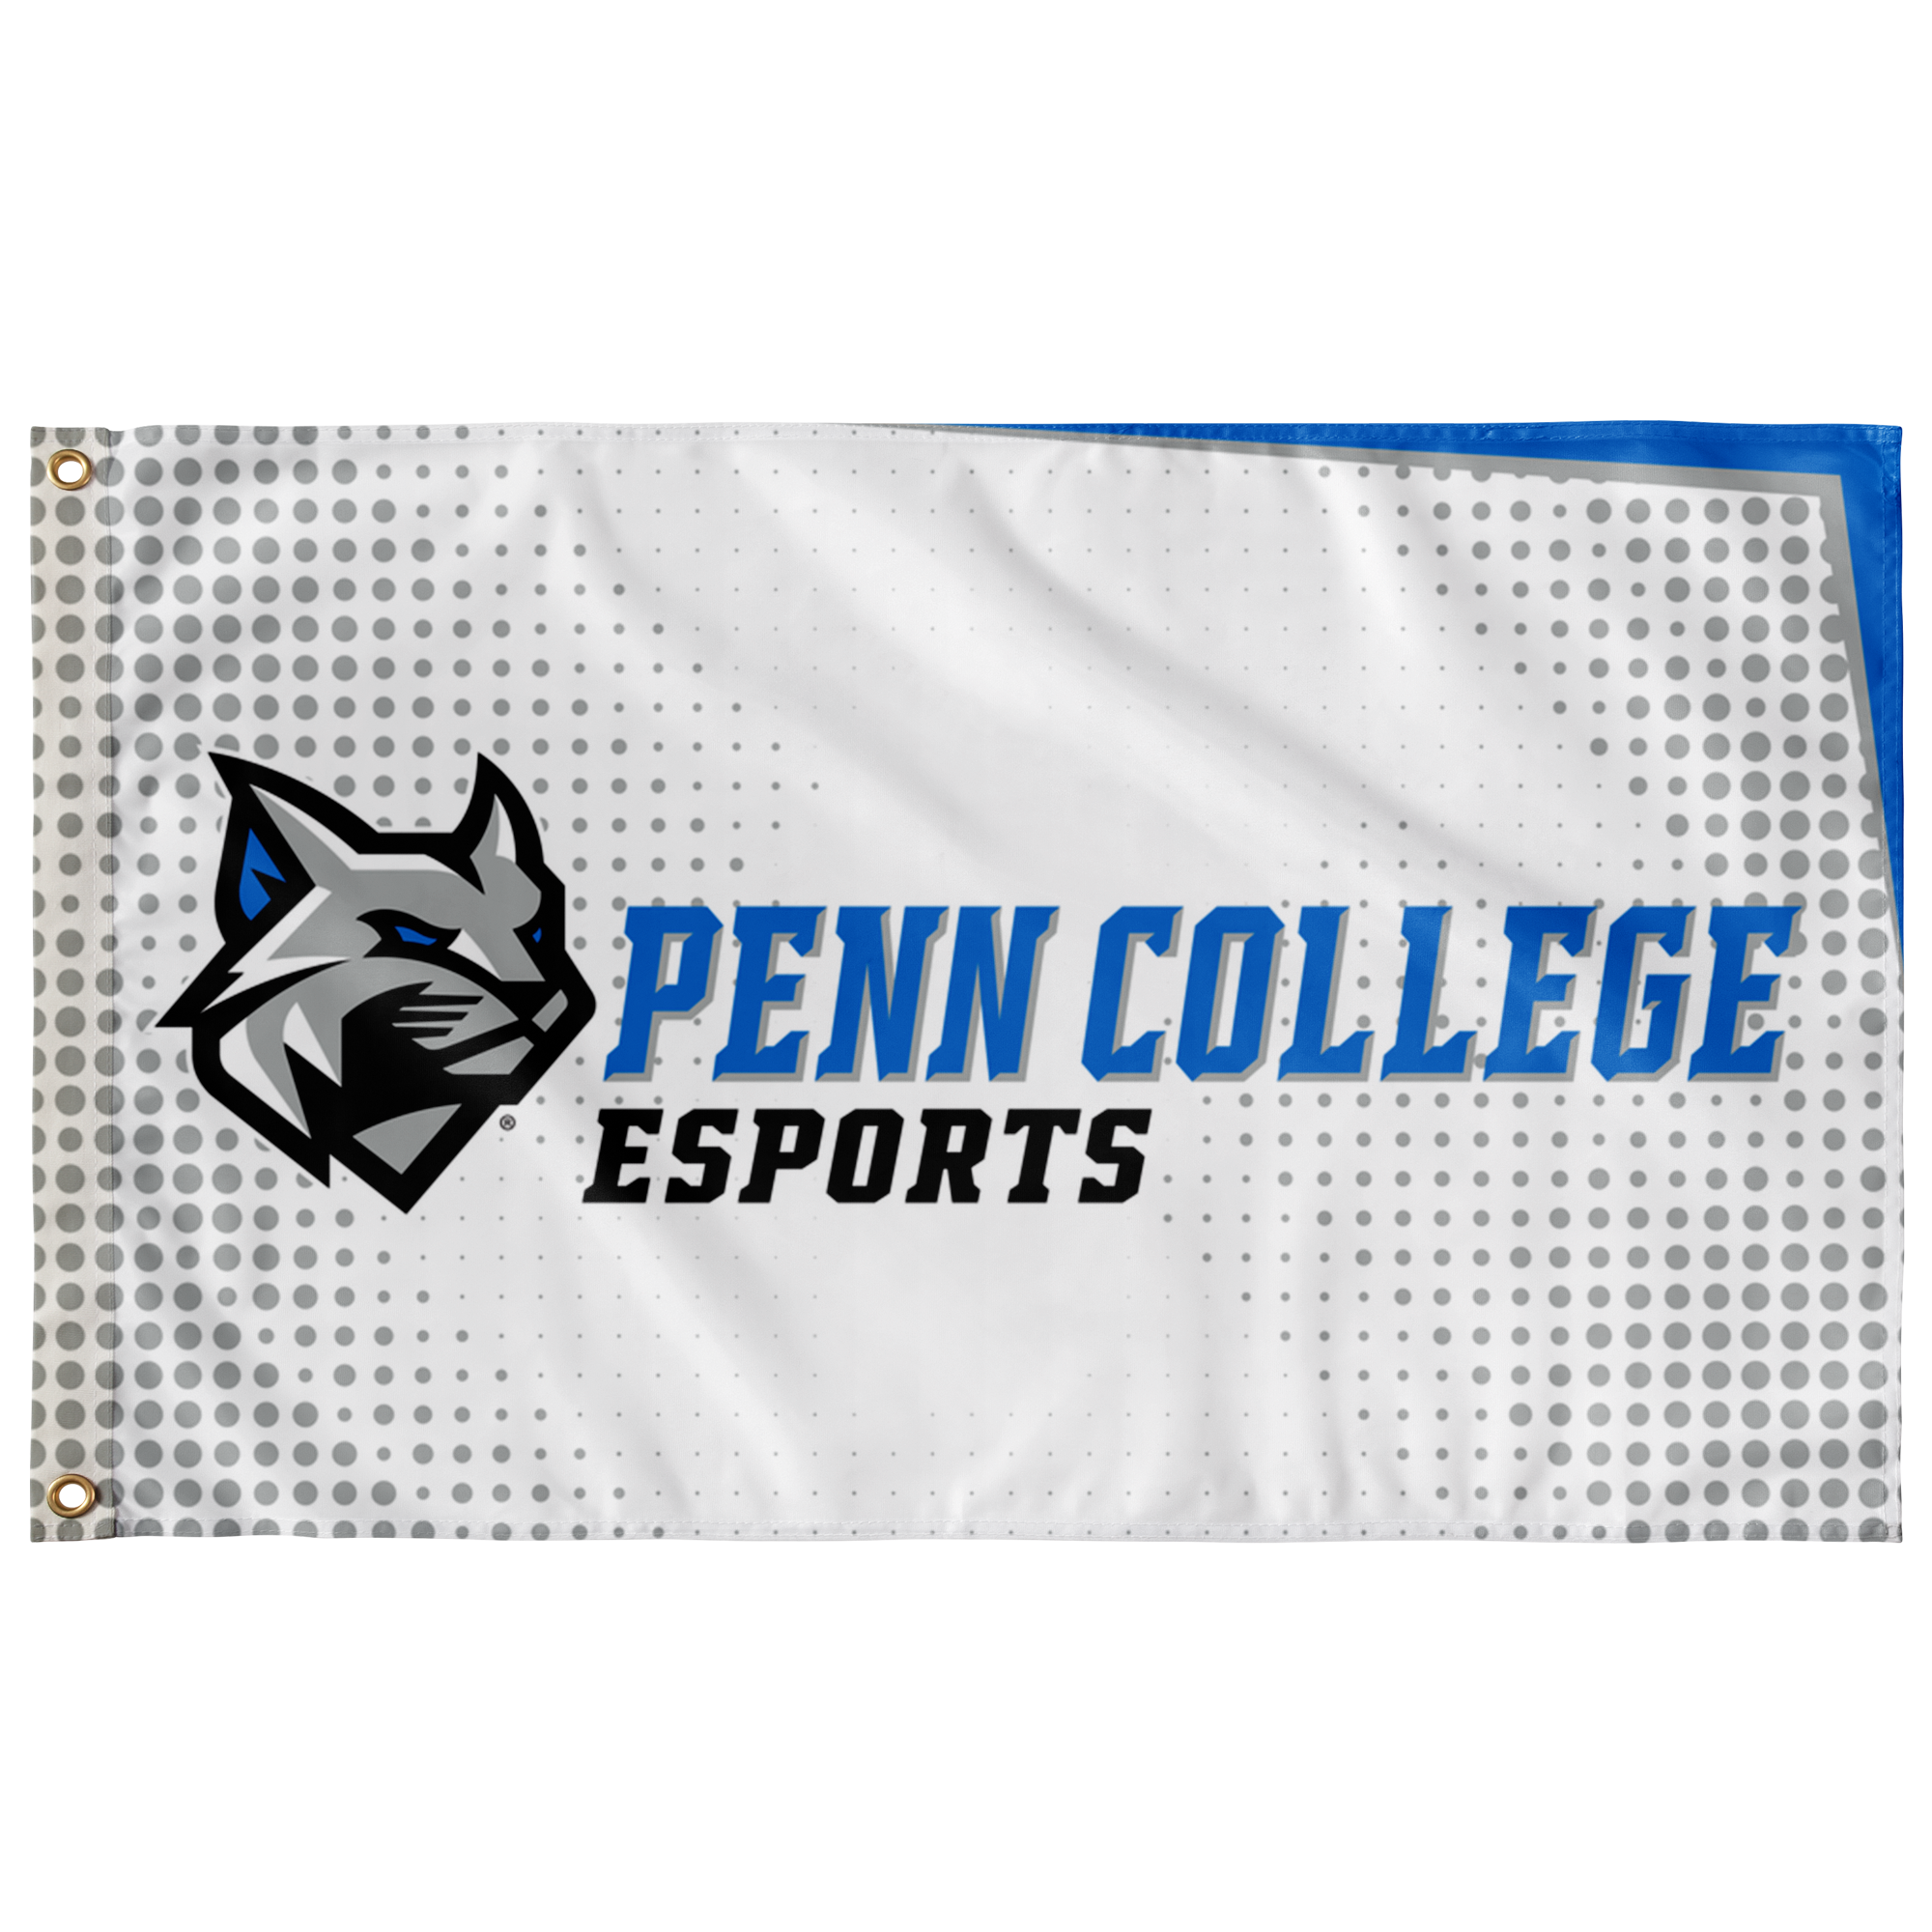 Penn College Esports Flag